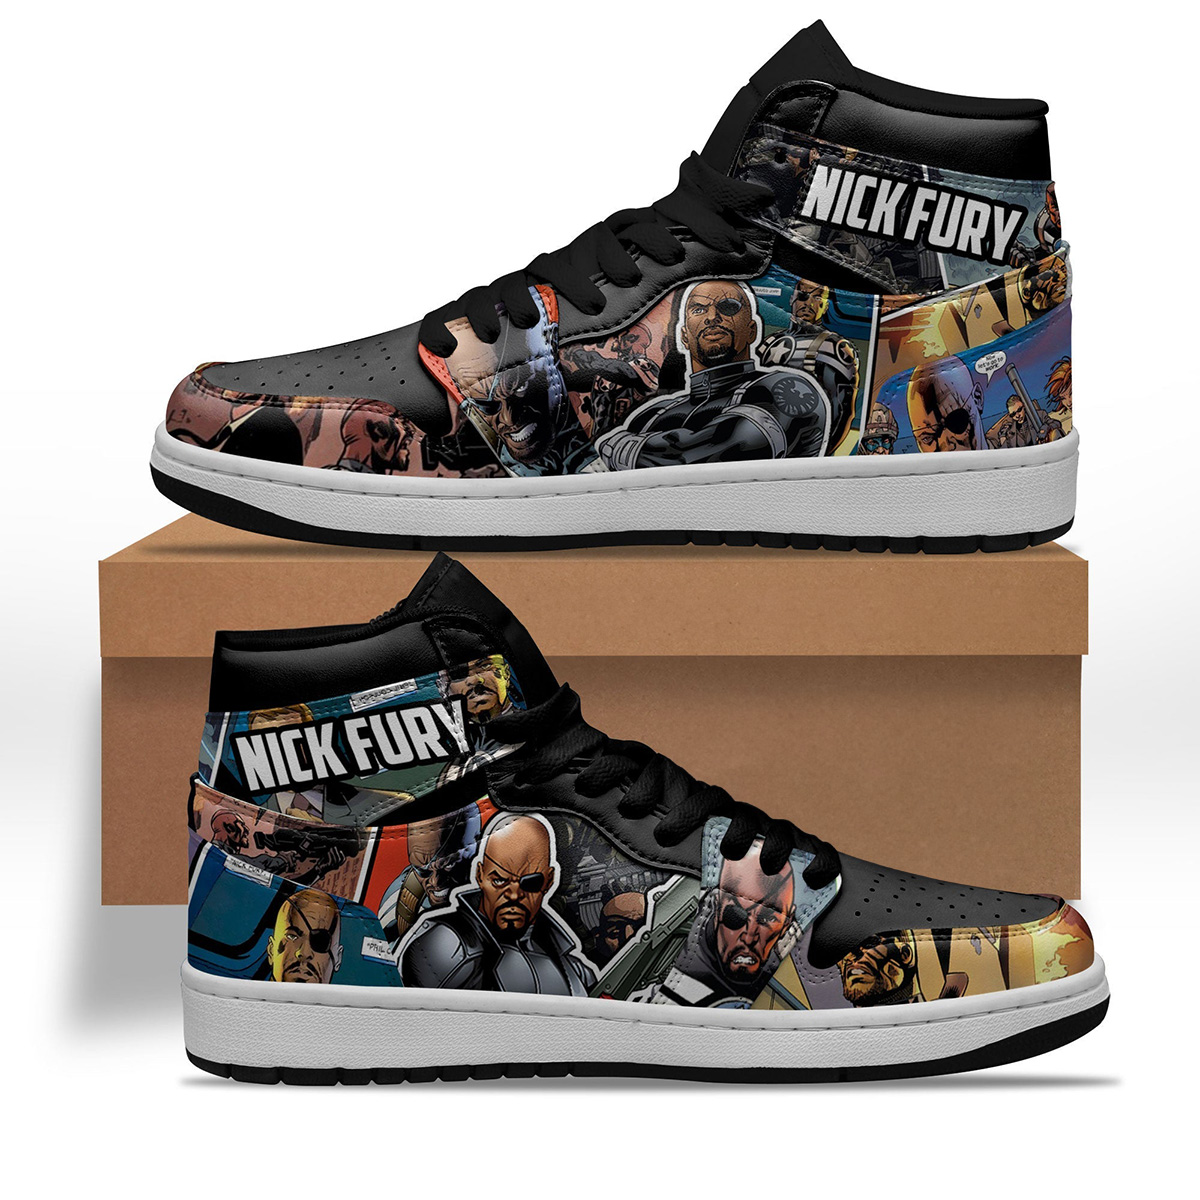 Avenger Nick Furry Shoes Custom